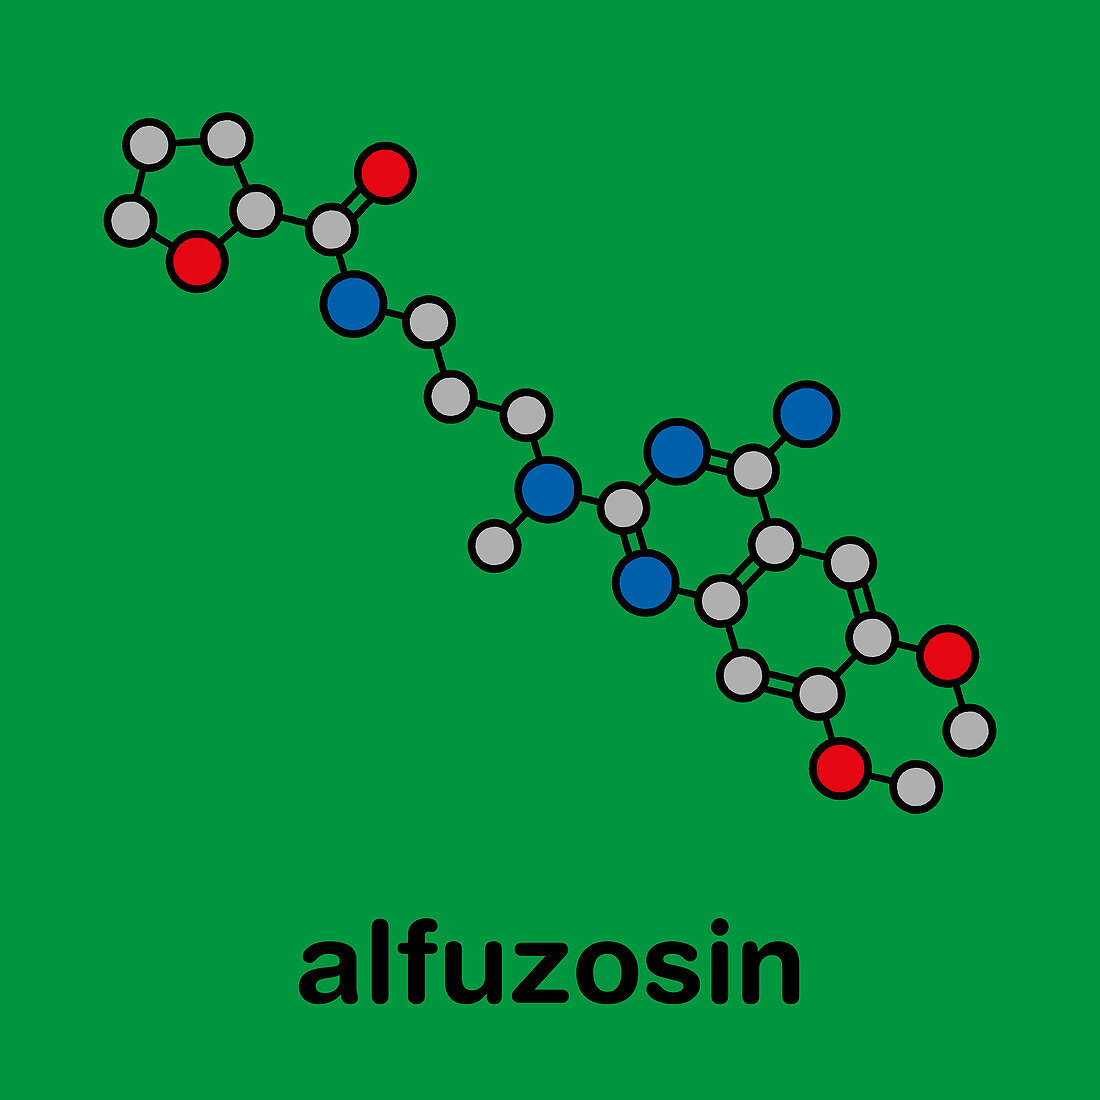 Alfuzosin benign prostate hyperplasia drug molecule